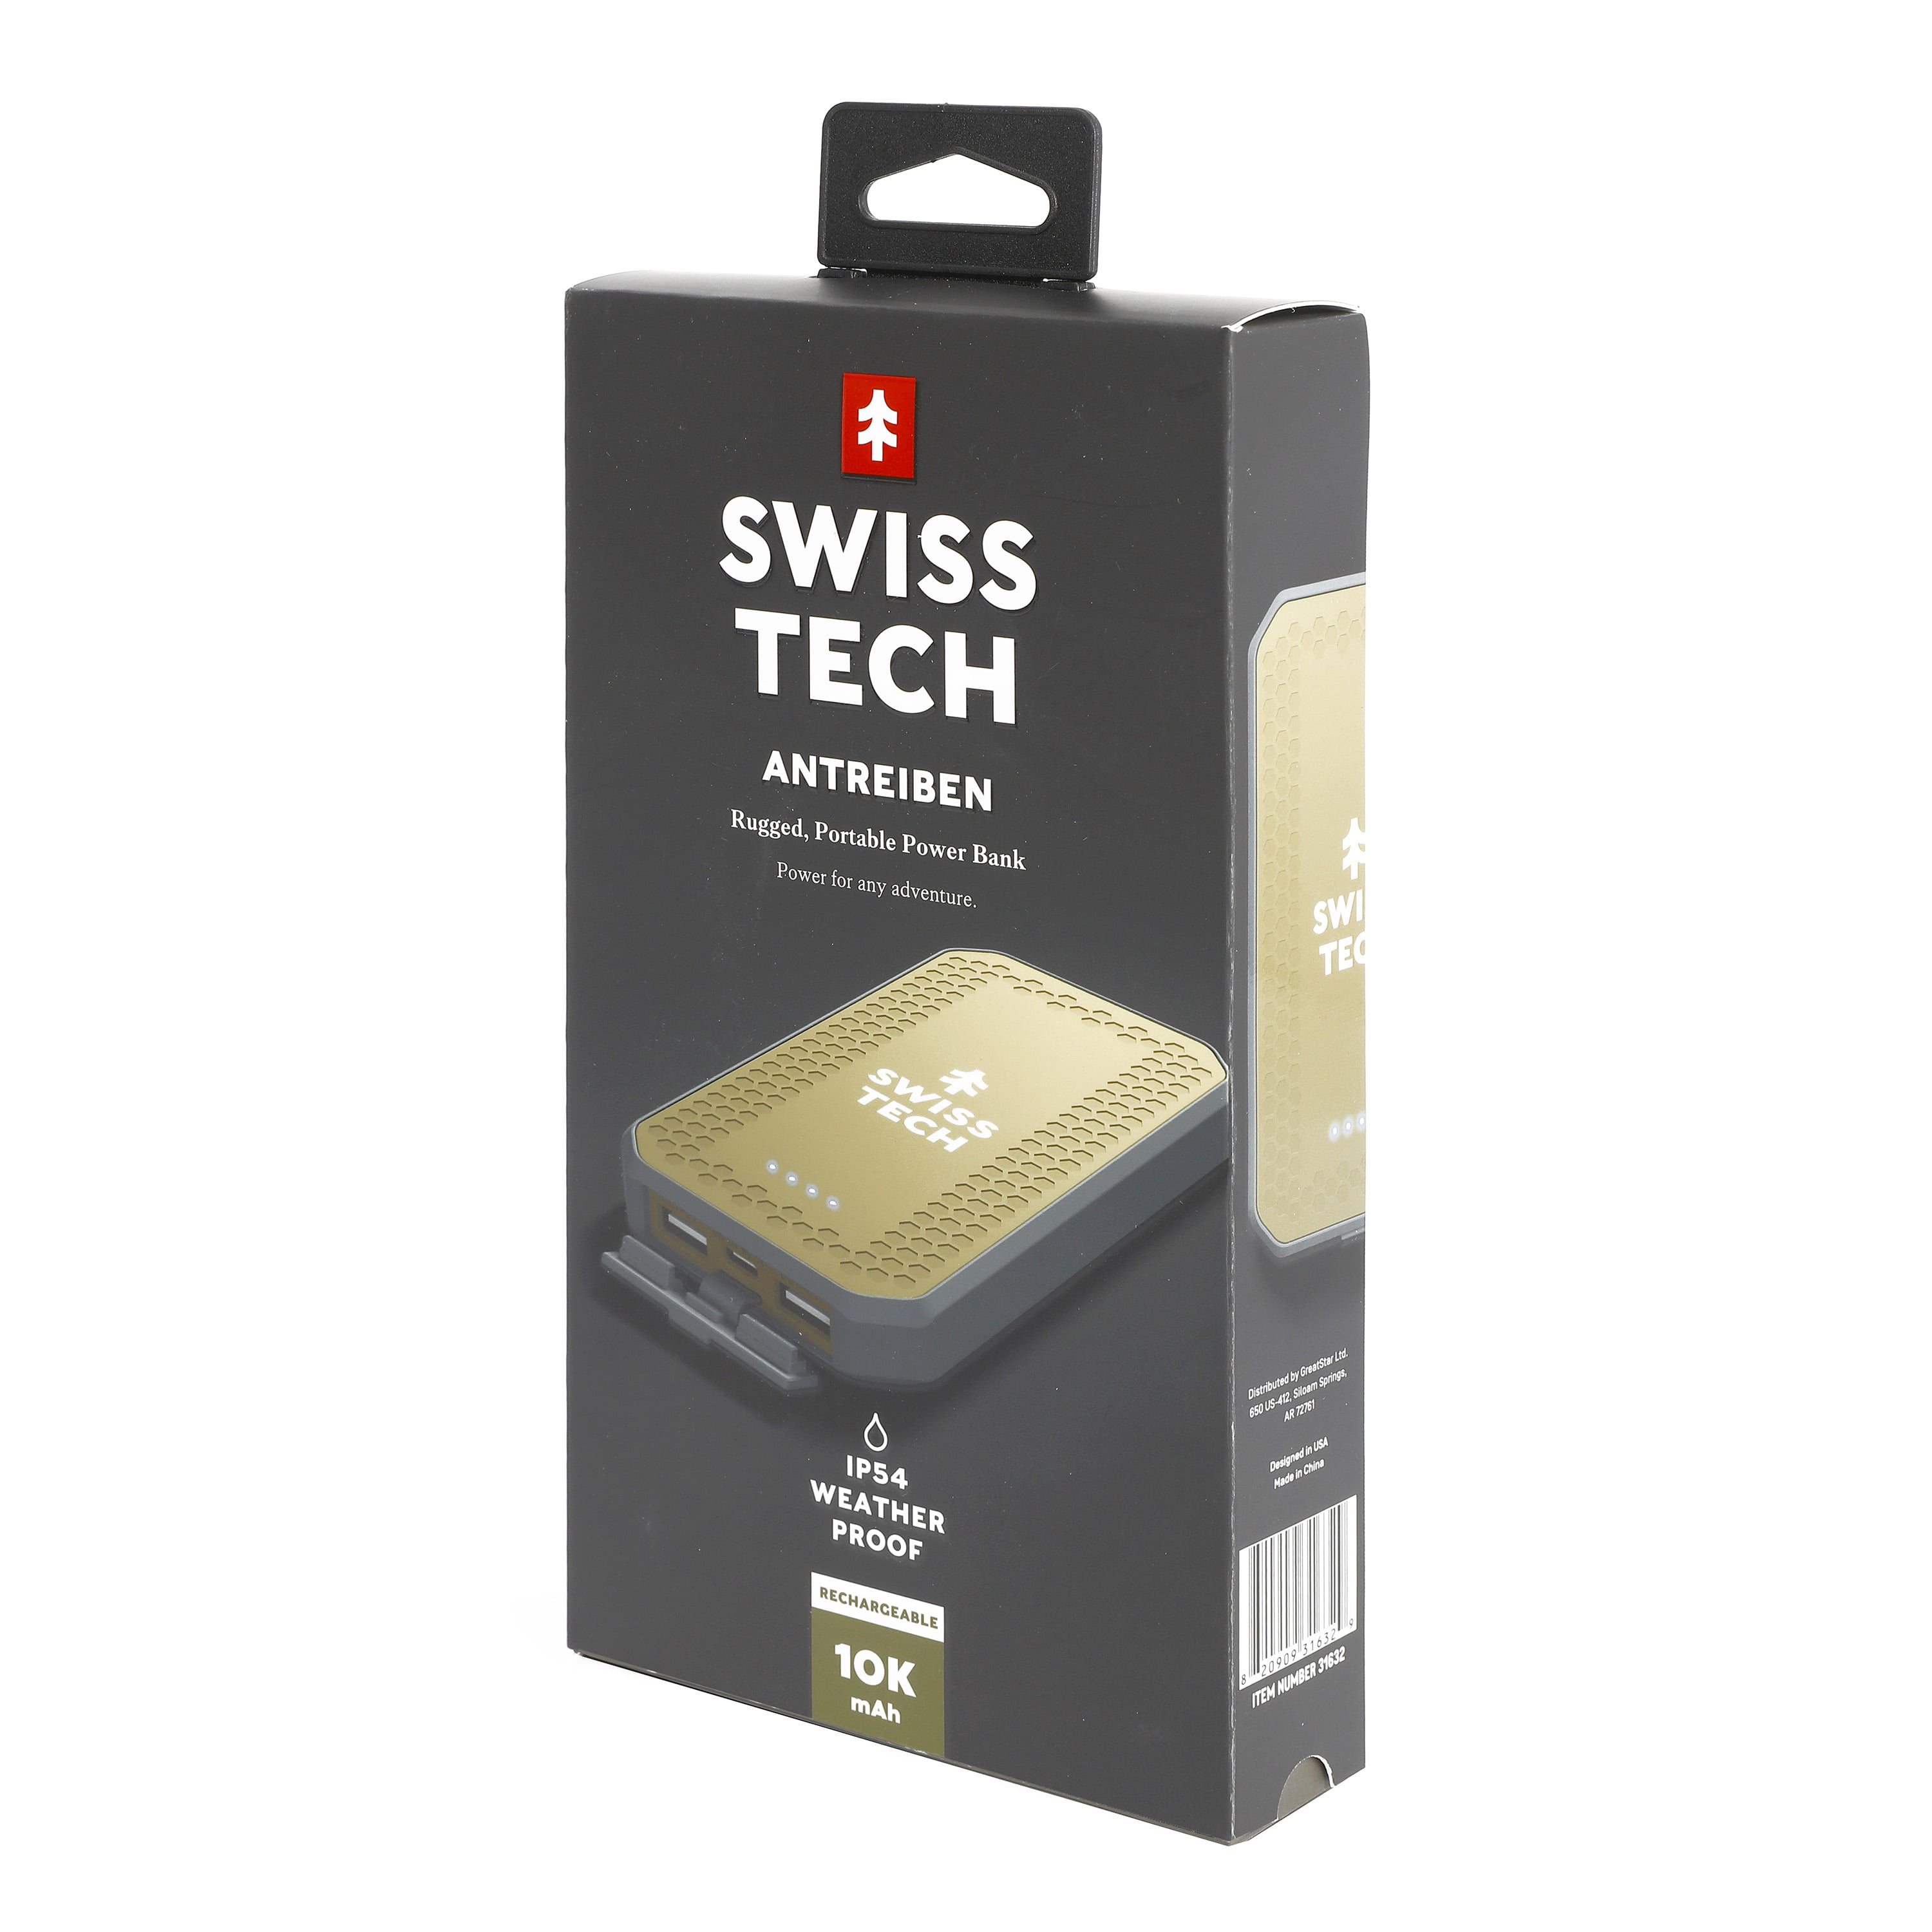 Swiss Tech Antreiben Power Bank with Dual USB